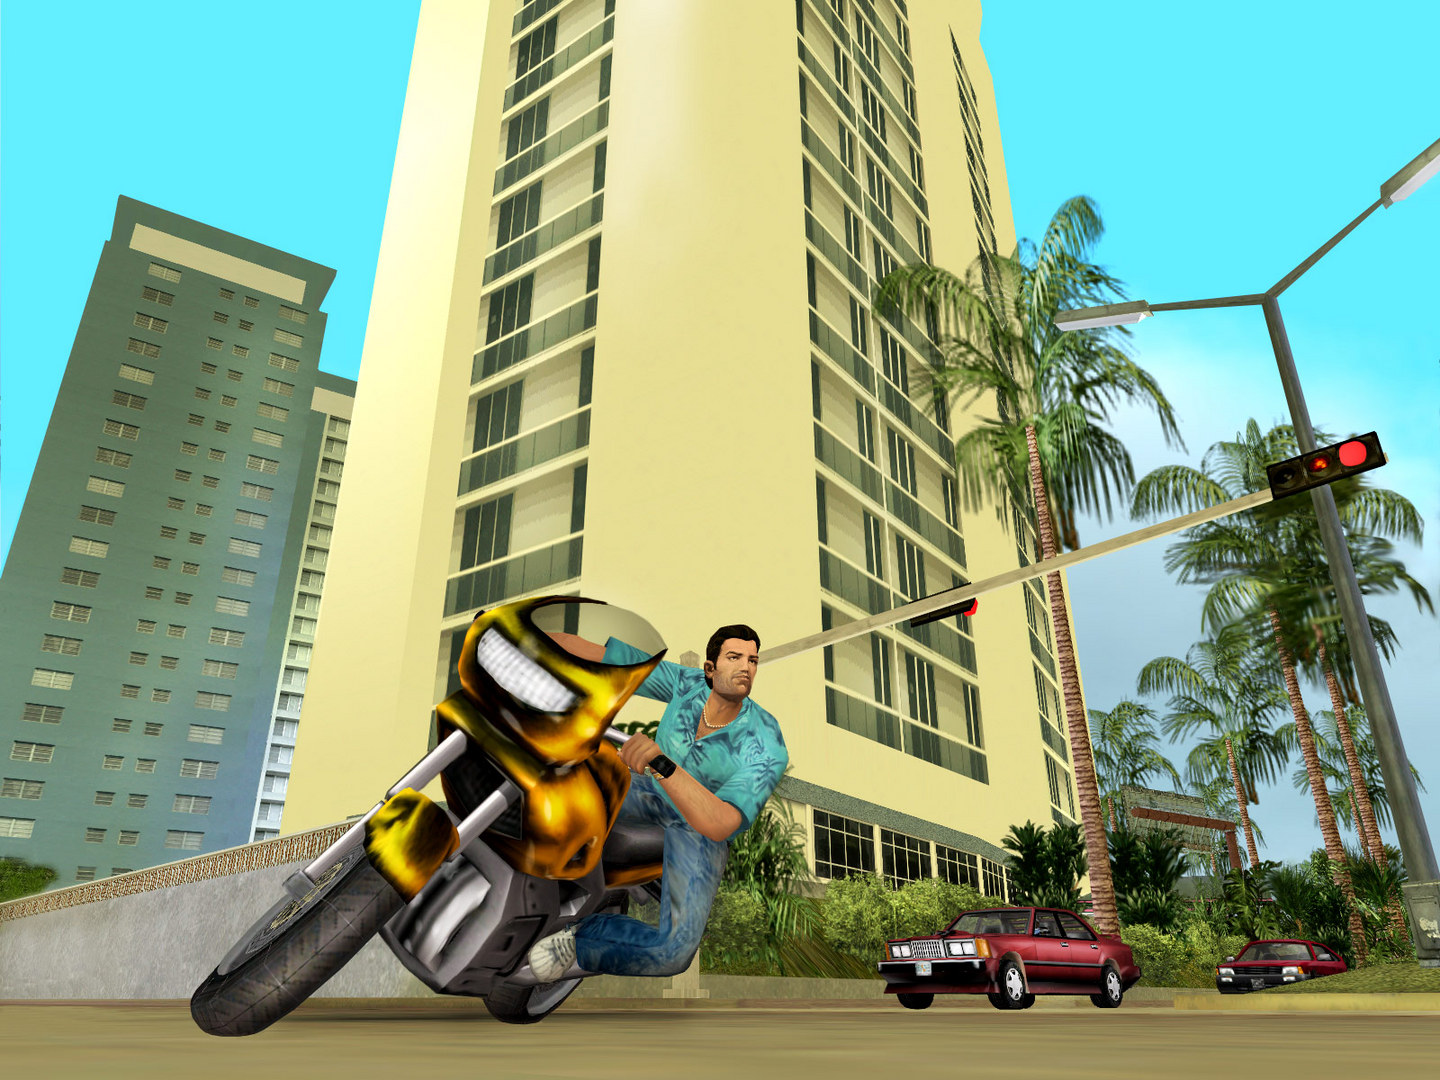 Grand Theft Auto Vice City On Steam - grand theft auto vice city roblox